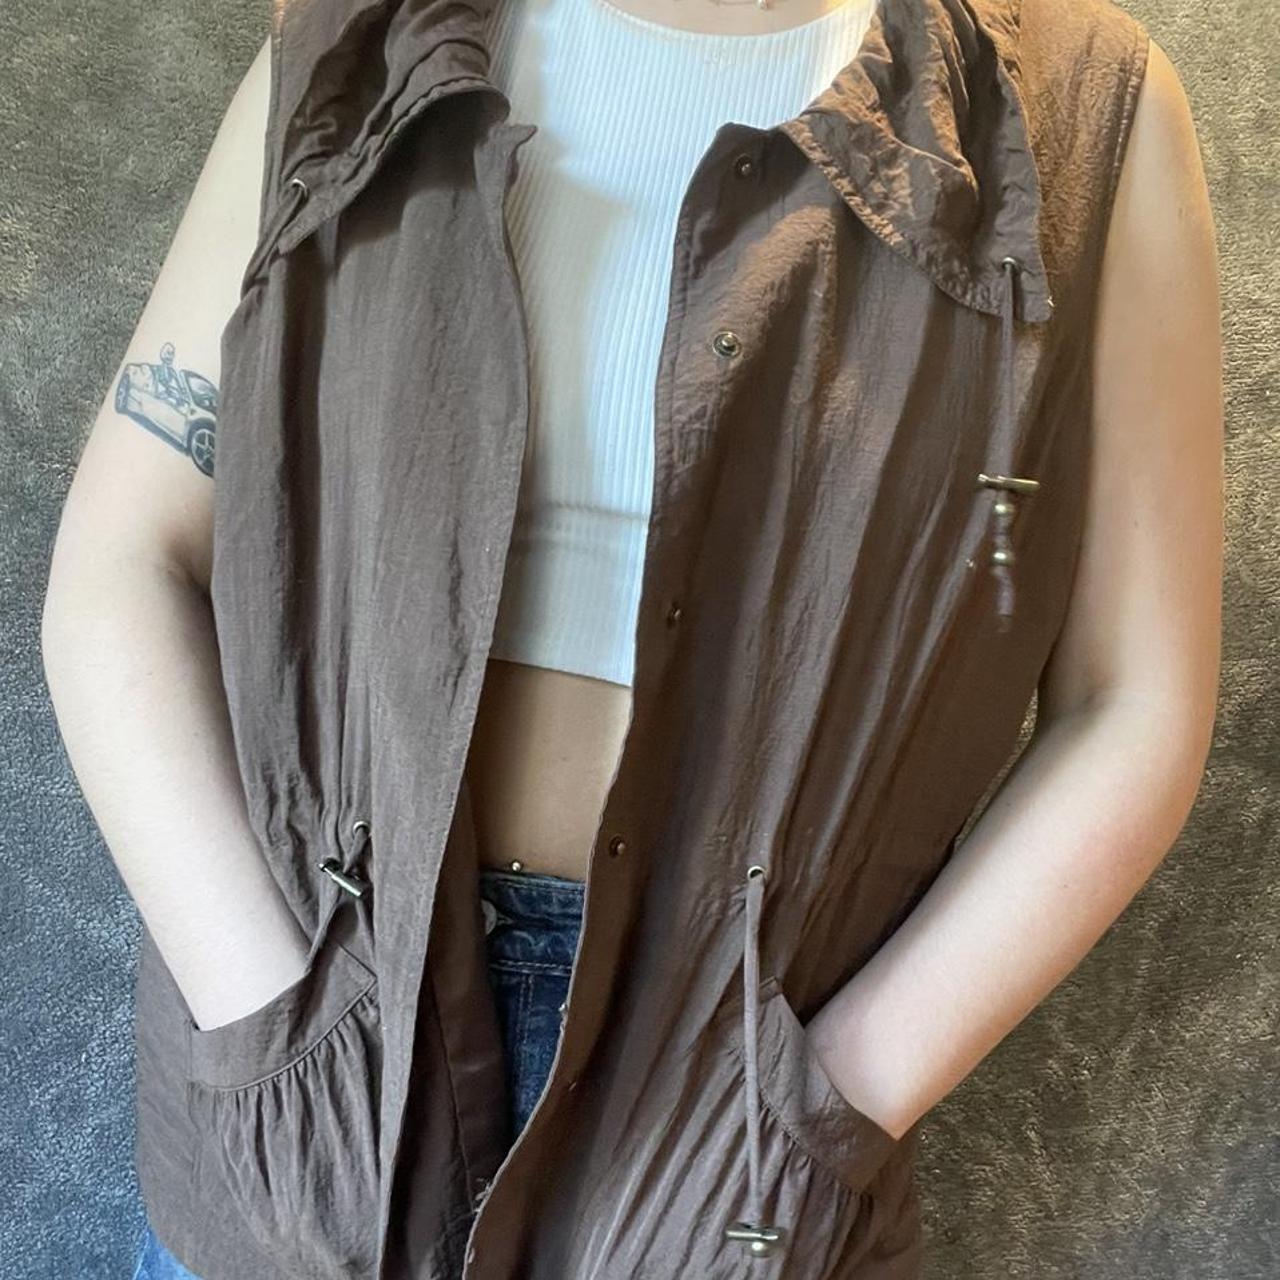 Product Image 1 - Women’s Vintage Oversized Brown Vest

Worn